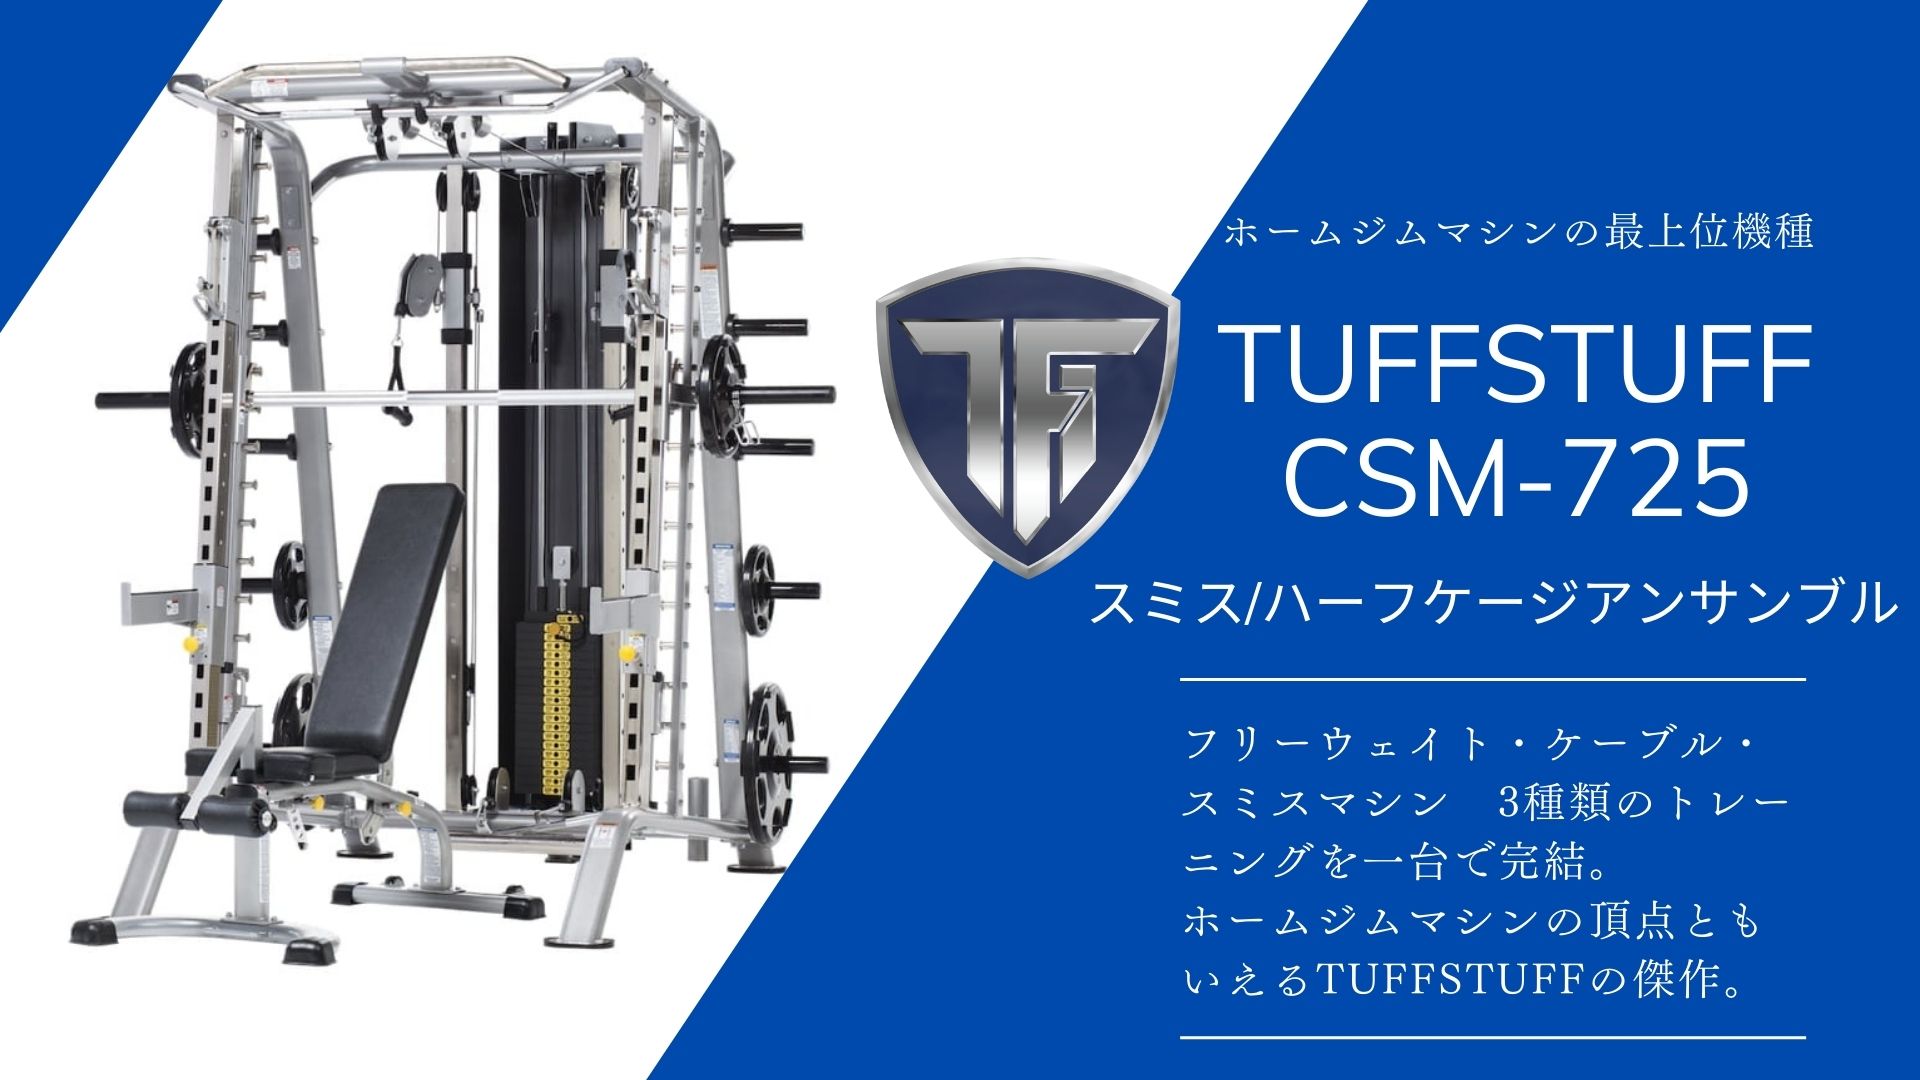 TUFFSTUFF CSM-725 スミス/ハーフケージアンサンブル トップイメージ